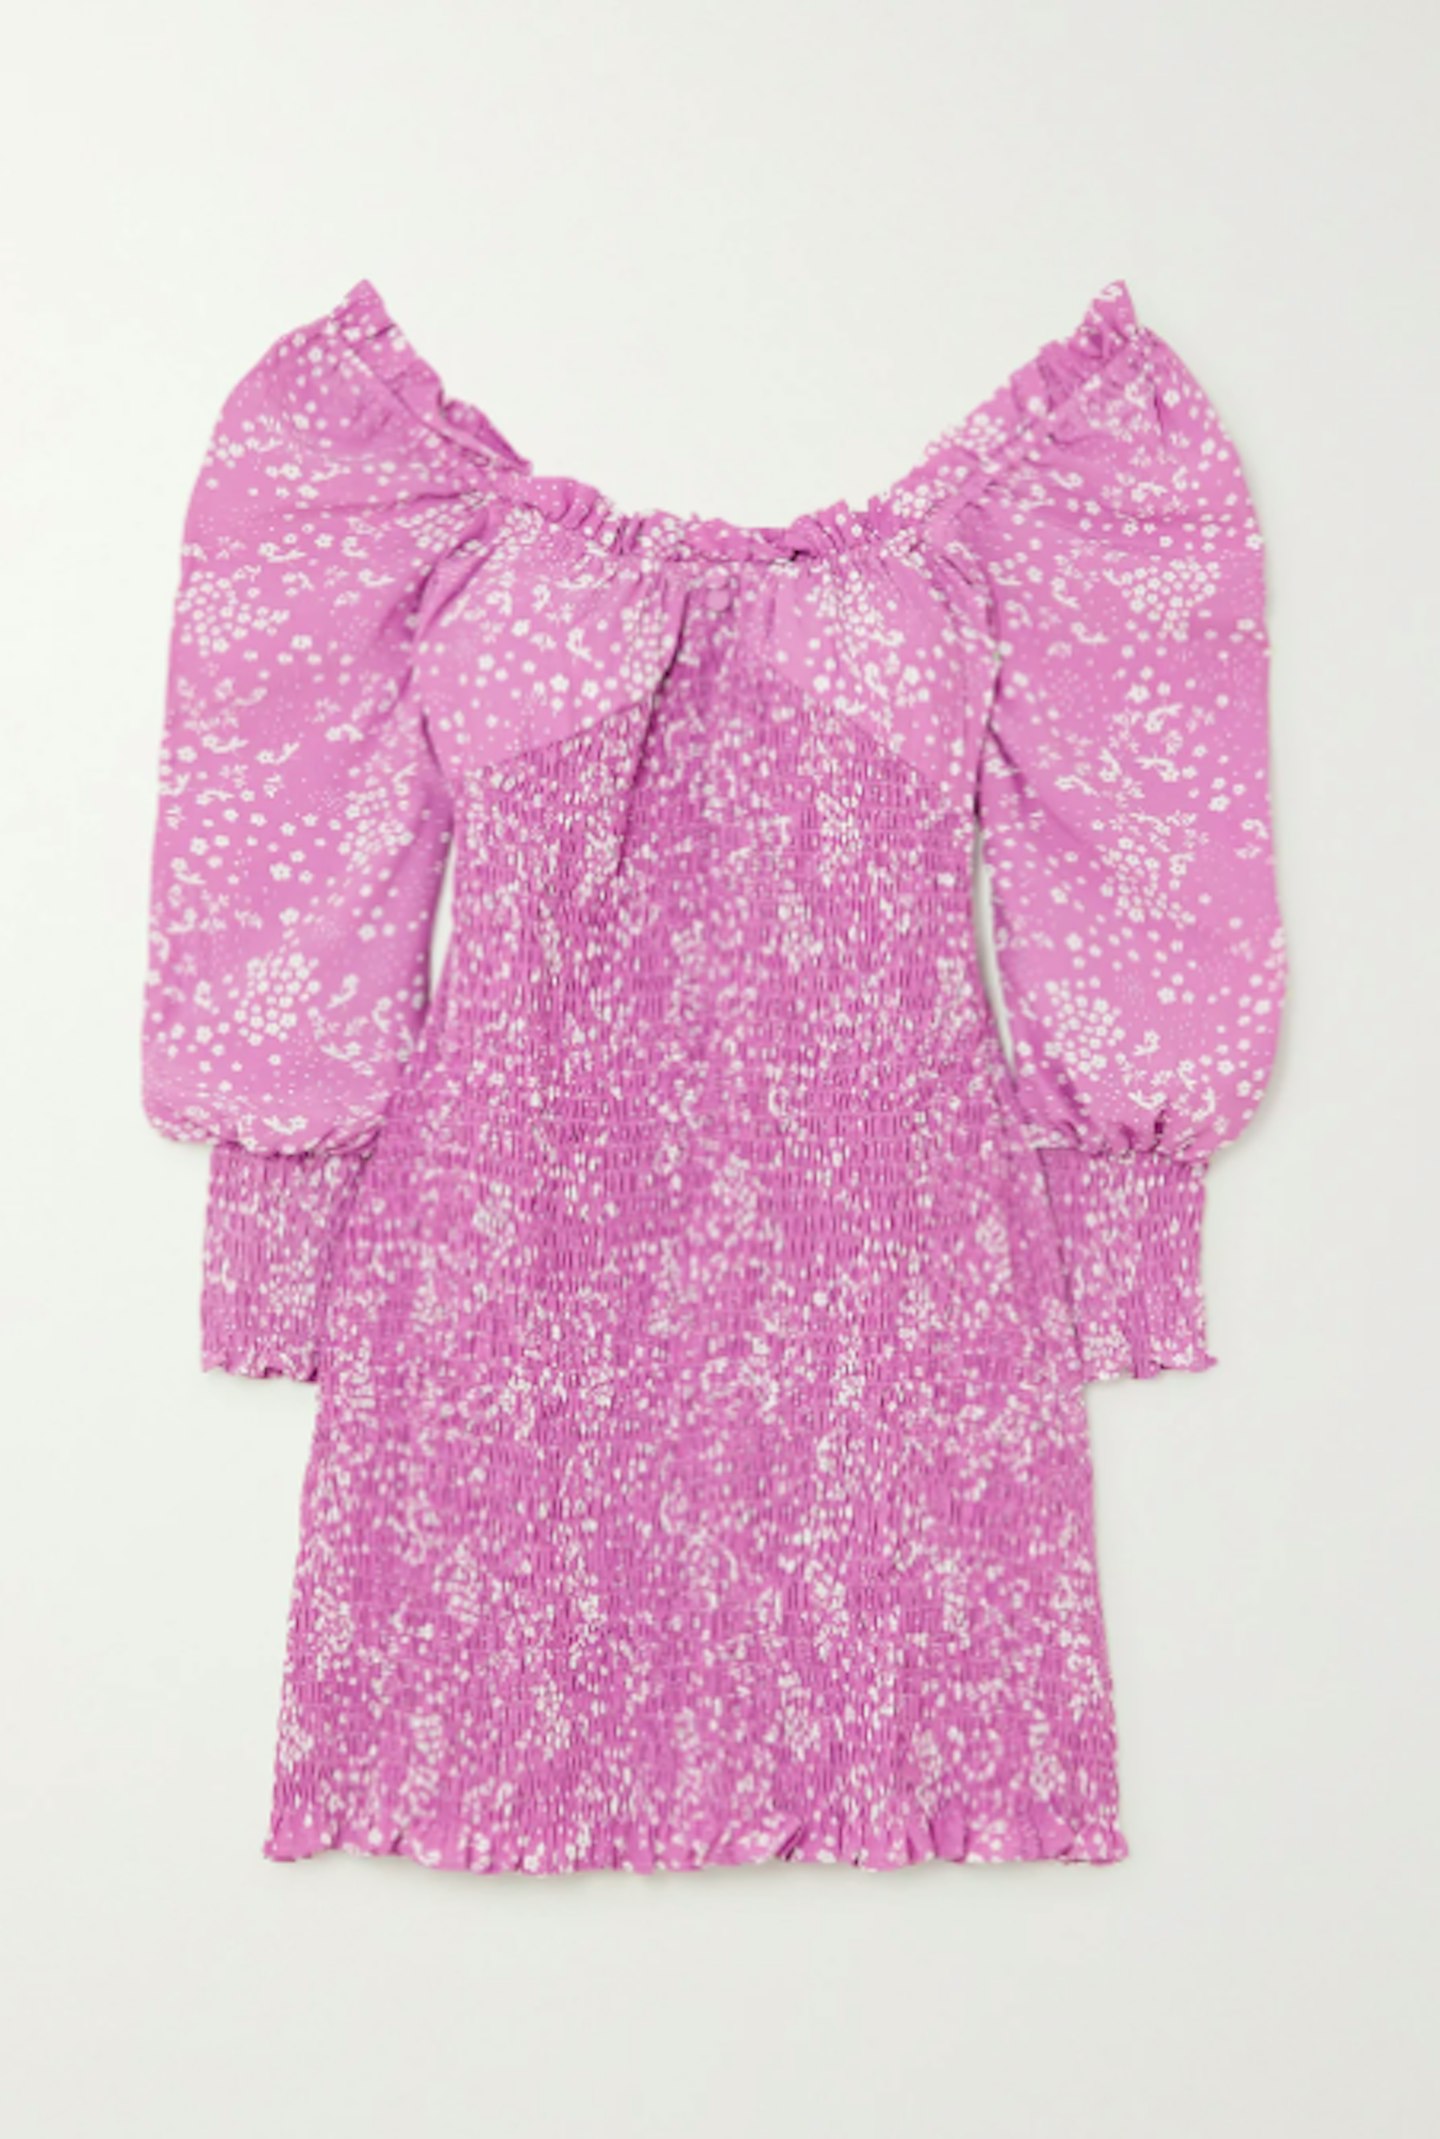 Faithfull The Brand, Gombardy Shirred Floral-Print Crepe Mini Dress, £180